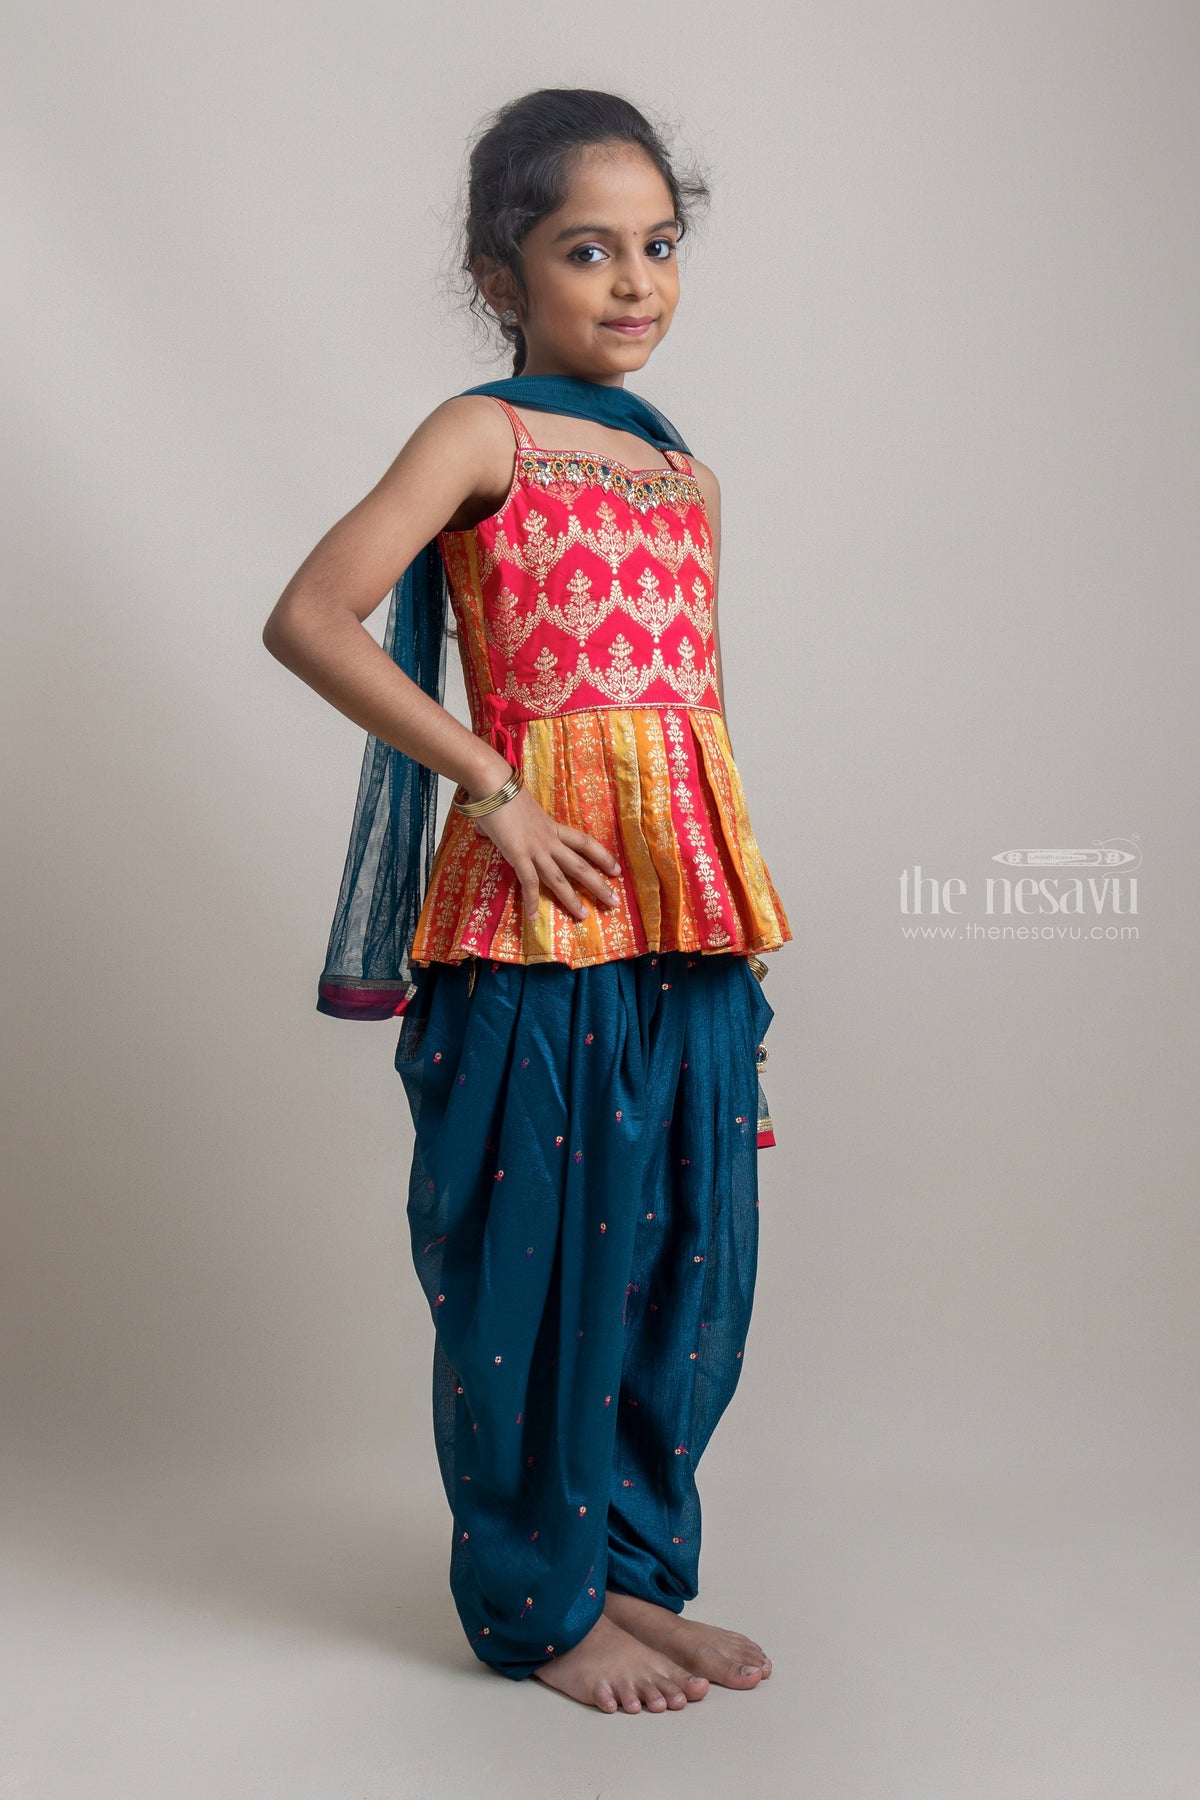 Girls Patiala Suit - Buy Girls Patiala Suit online in India